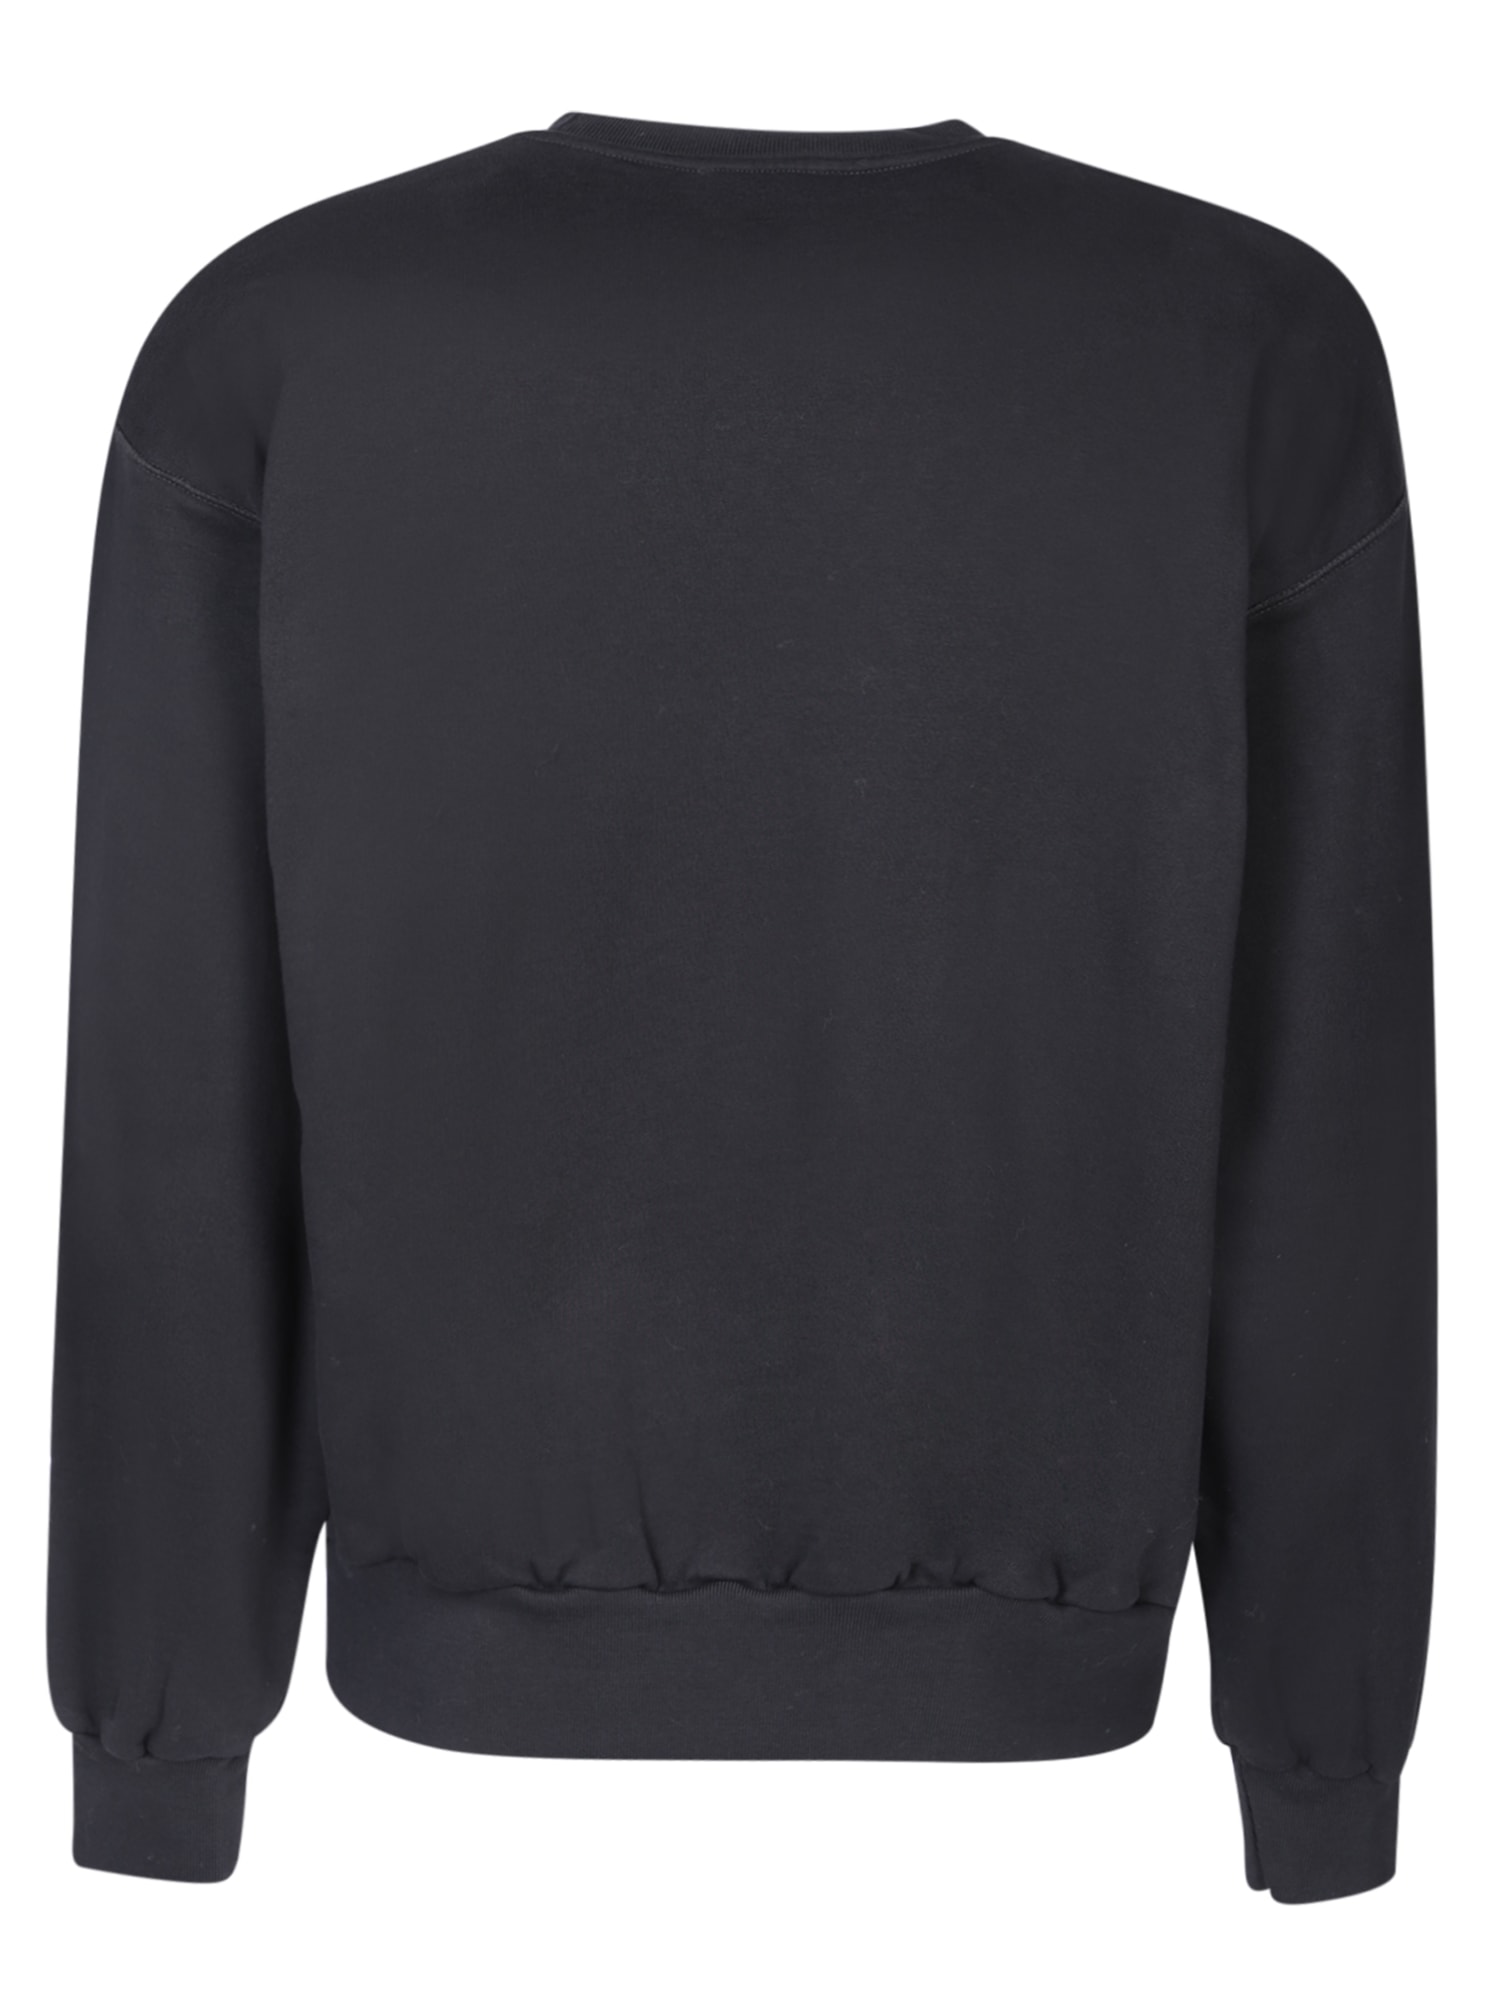 Shop Aries Jadoro Black Sweatshirt